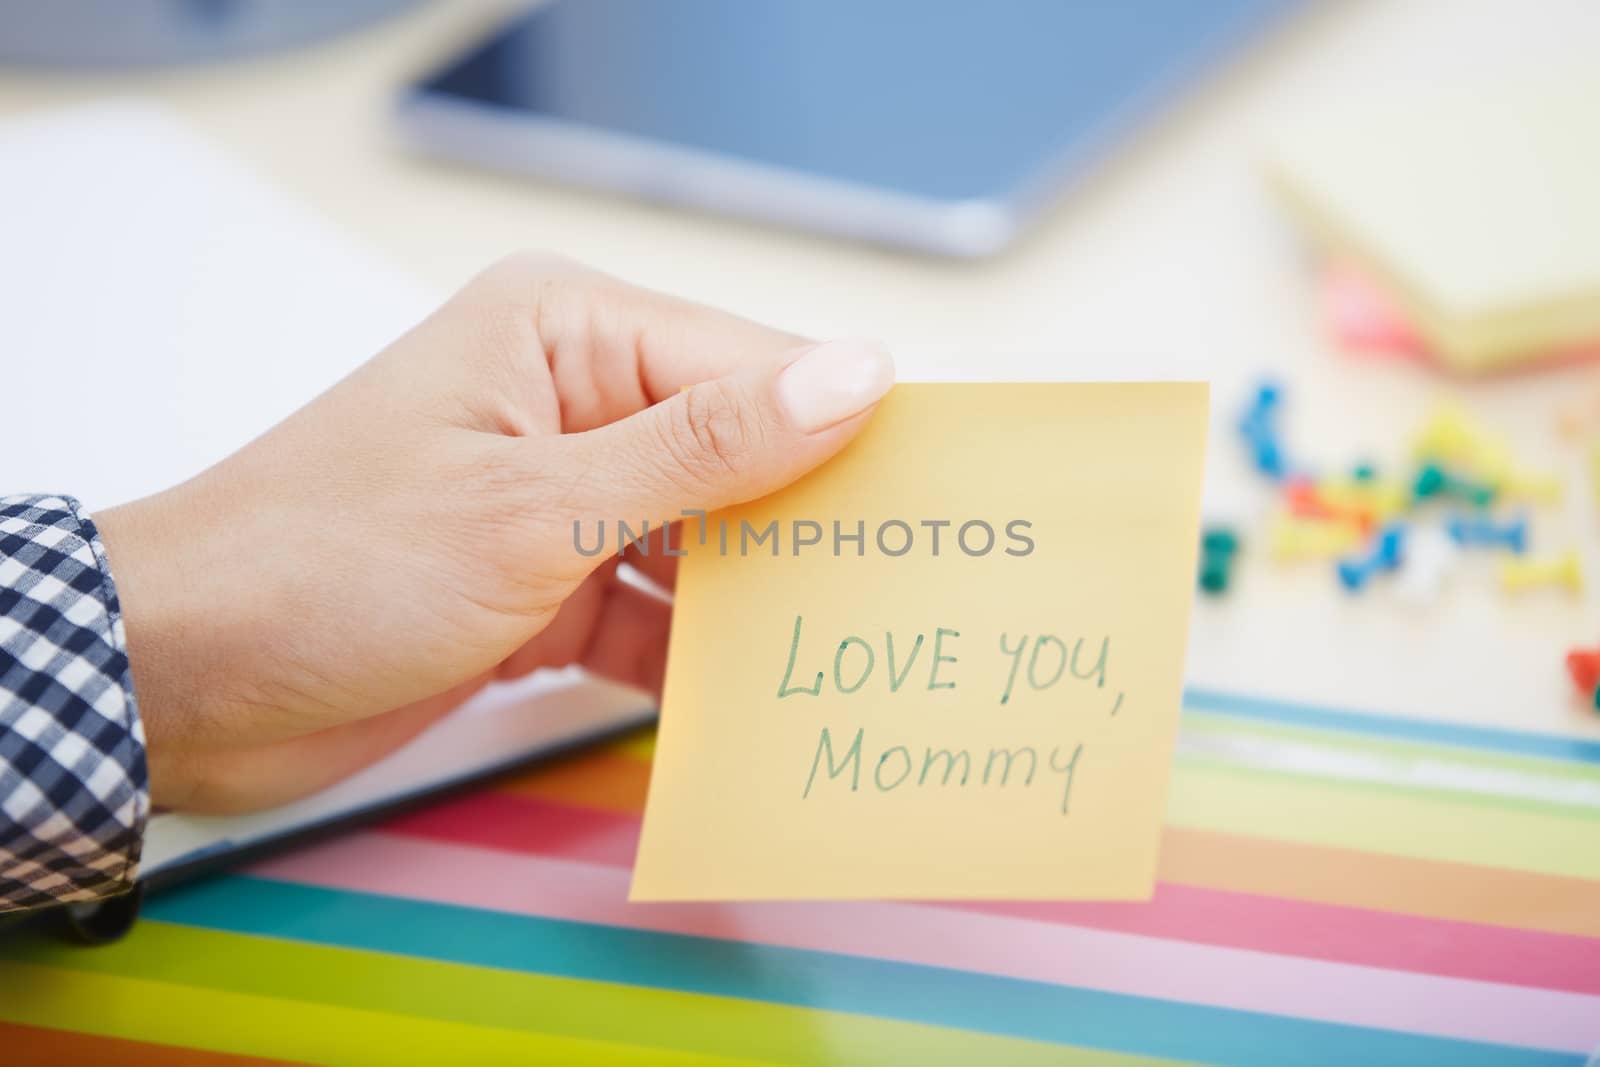 Love you mommy by Novic